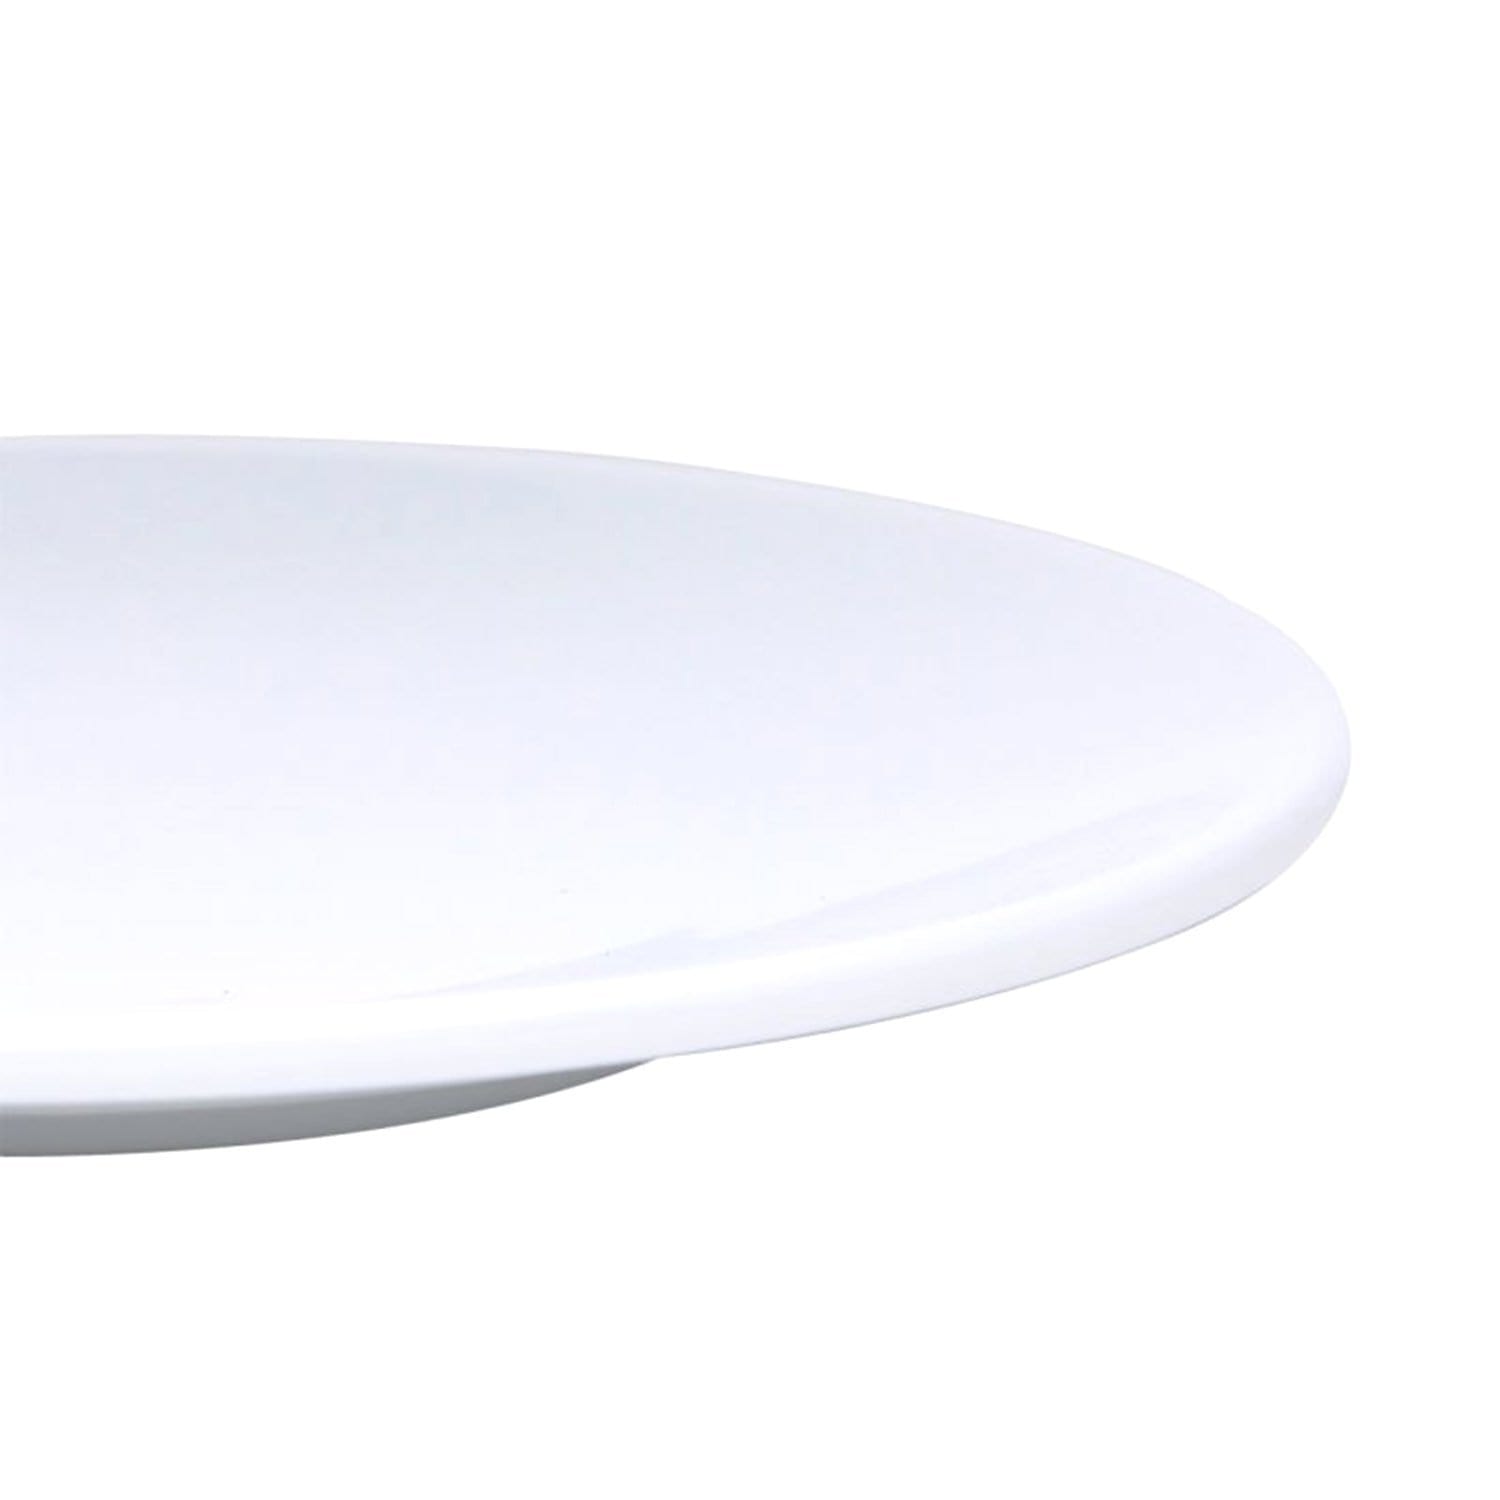 Dankotuwa Purity Salad Plate - White, 16.3 cm - 3612 - Jashanmal Home